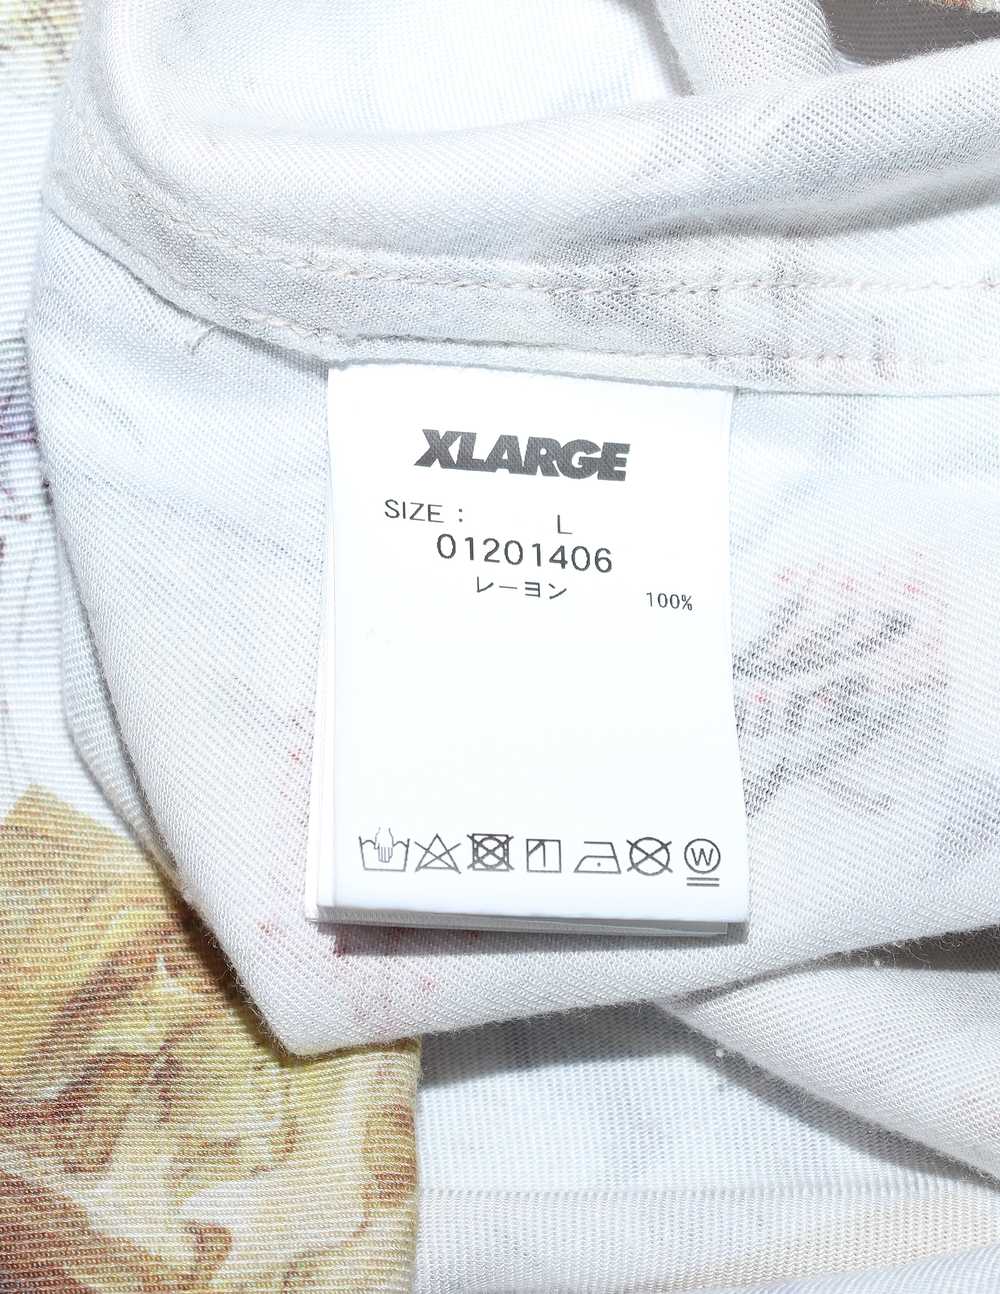 X-Large Sorayama 'Erotica' Rayon Shirt - image 10